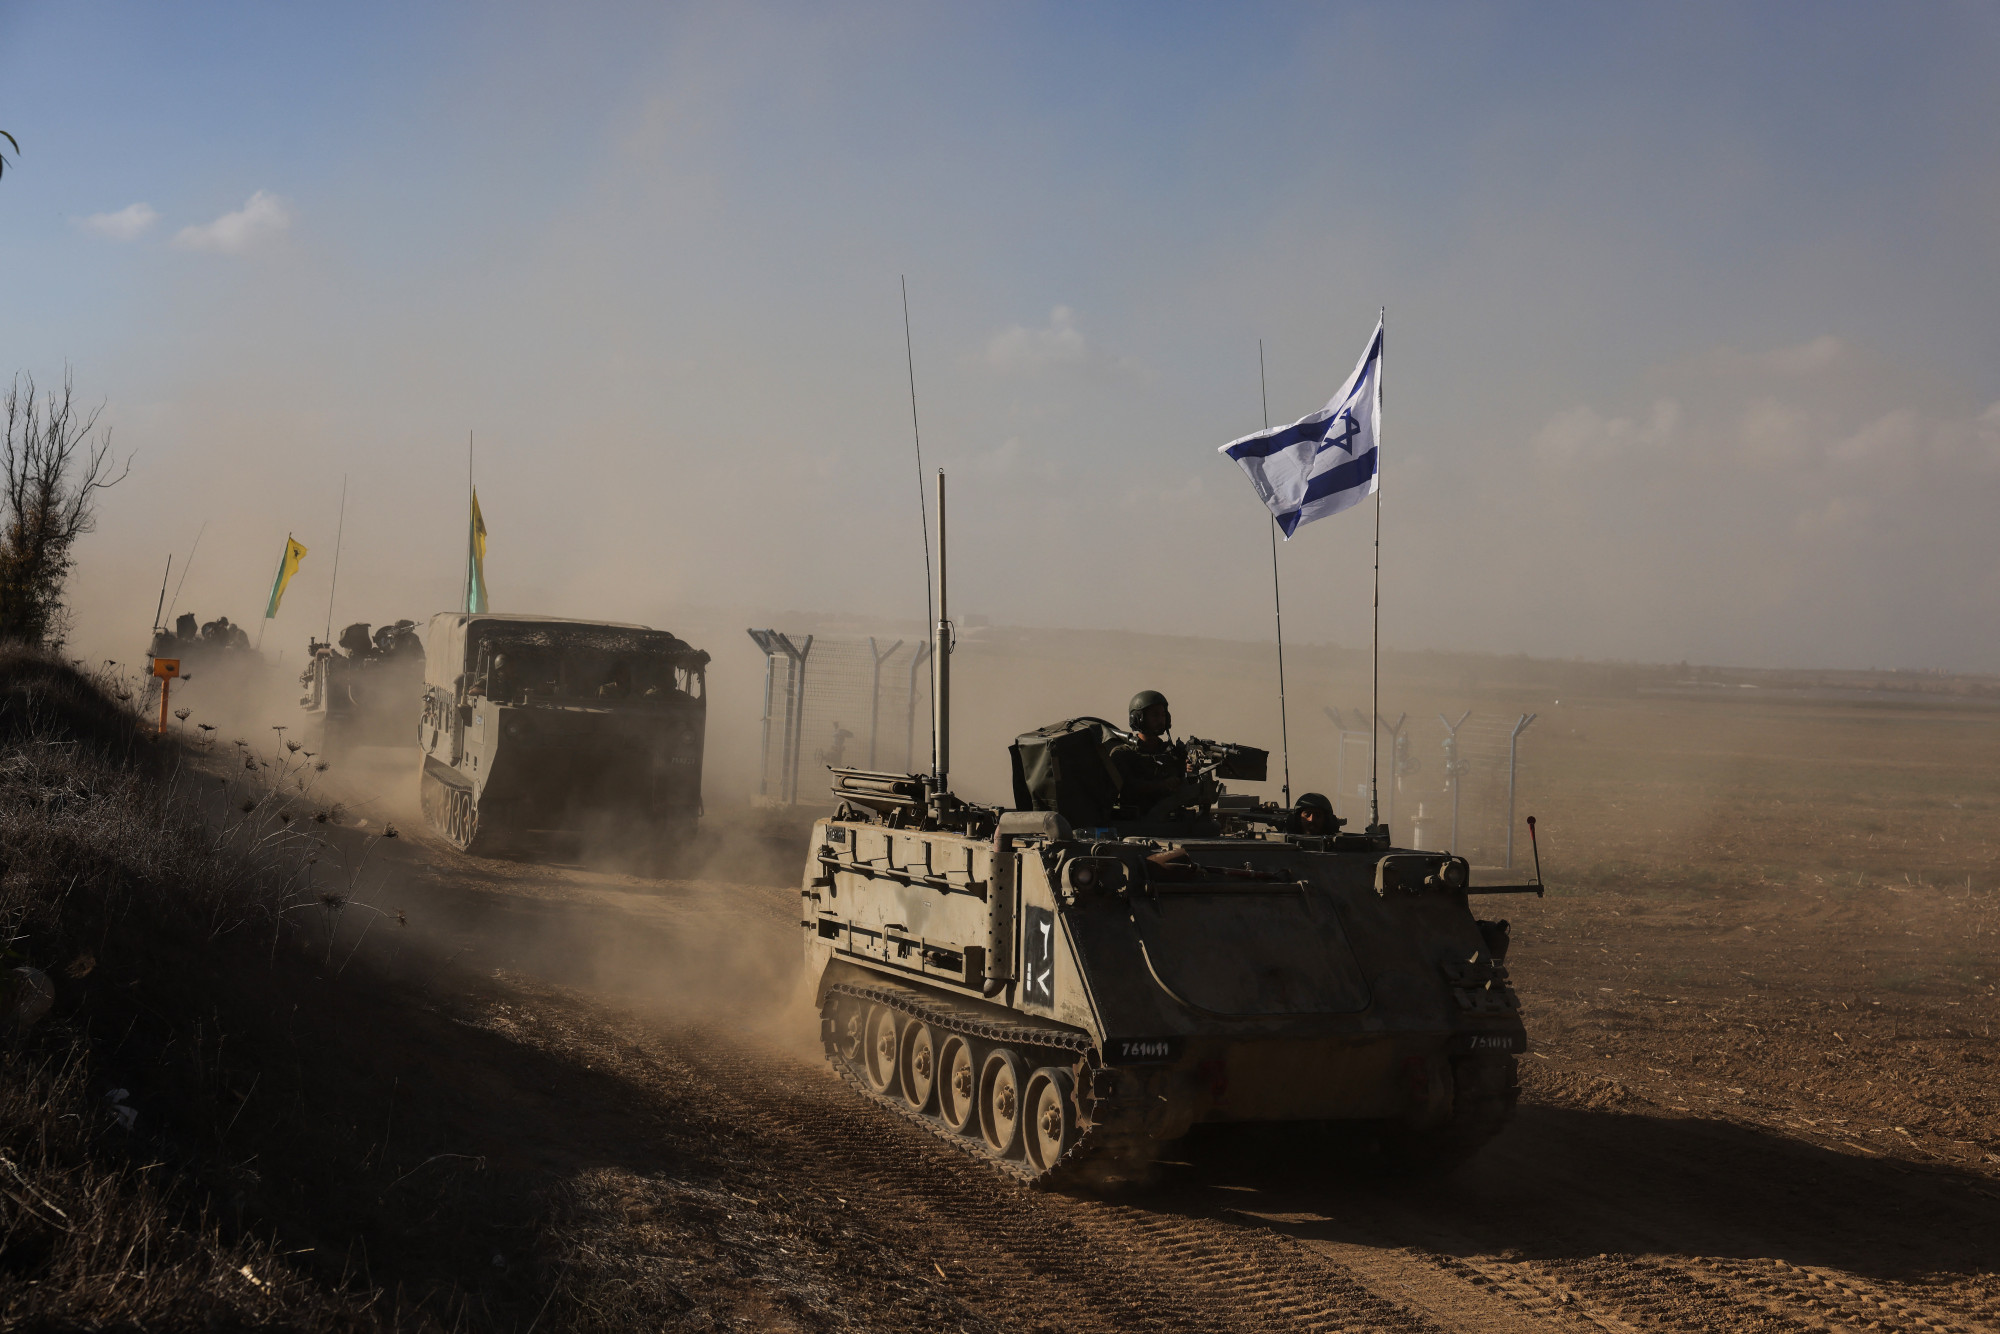 Izraeli katonai konvoj halad a Gázai övezet felé.